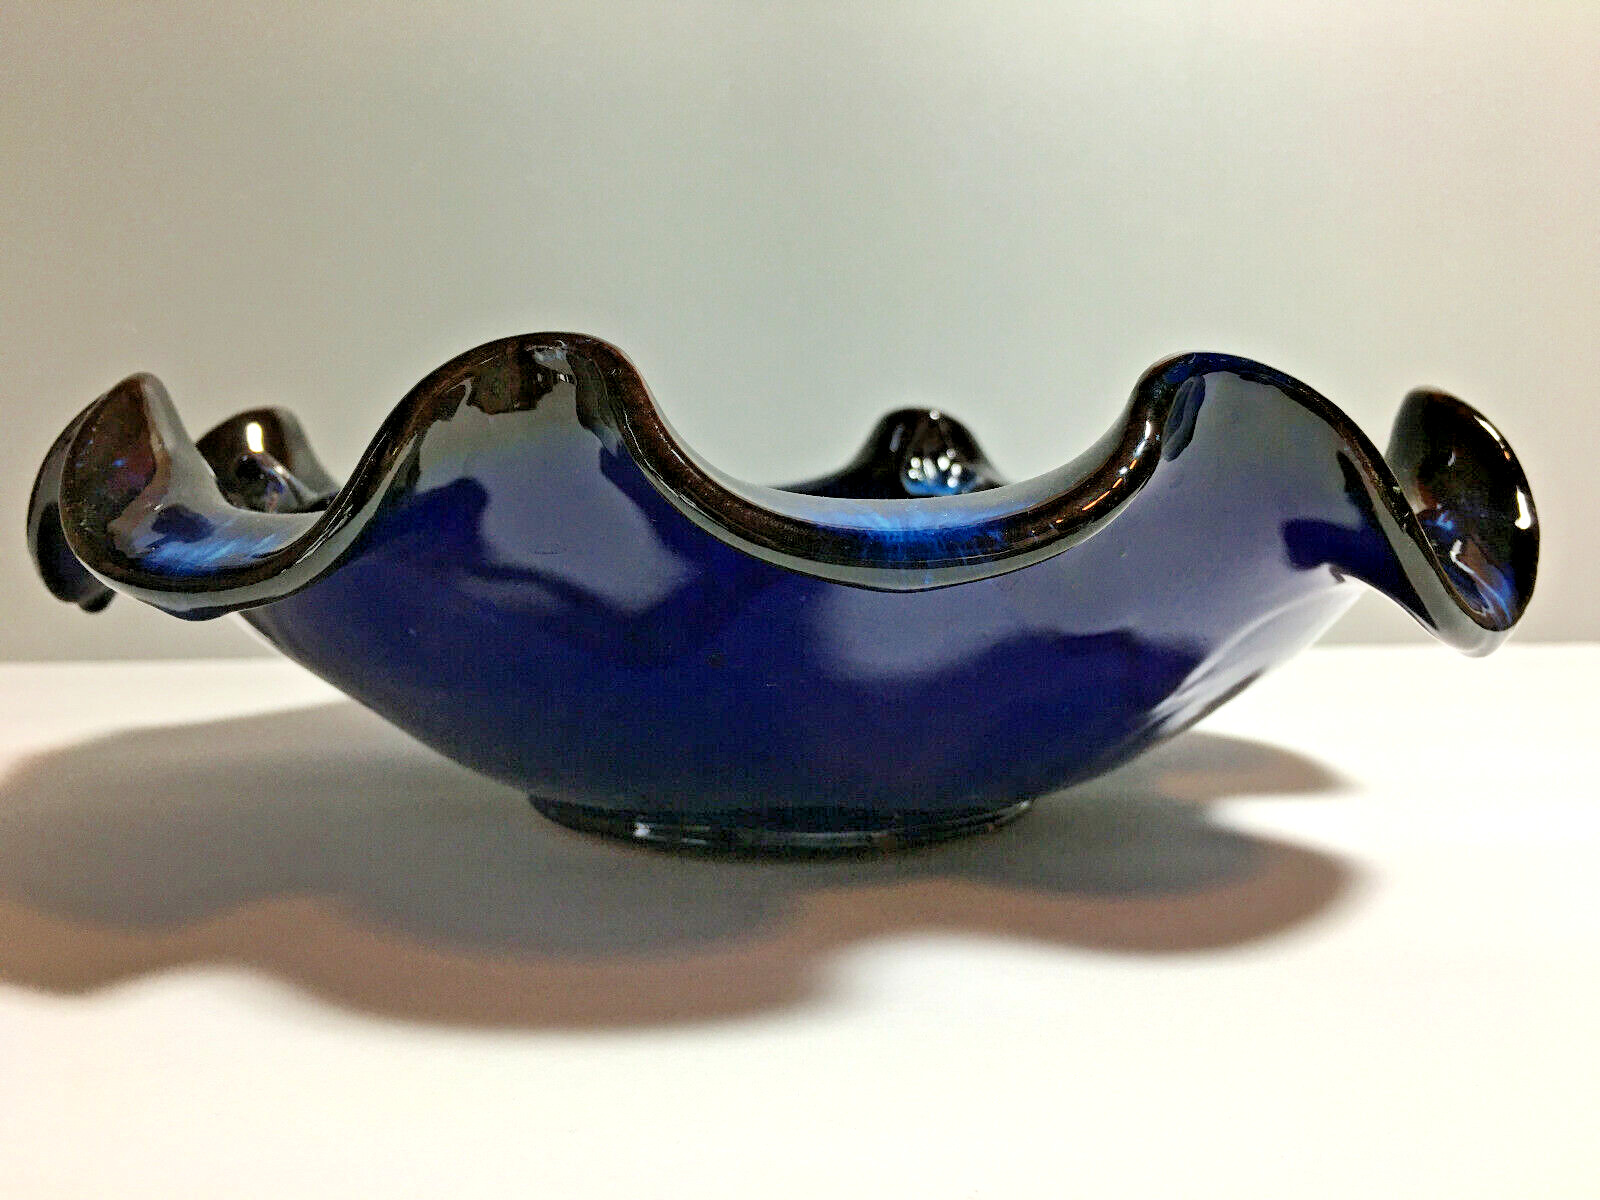 Vintage Ceramic Bowl Hand painted/Handmade in Greece - Cobalt Blue - Floral